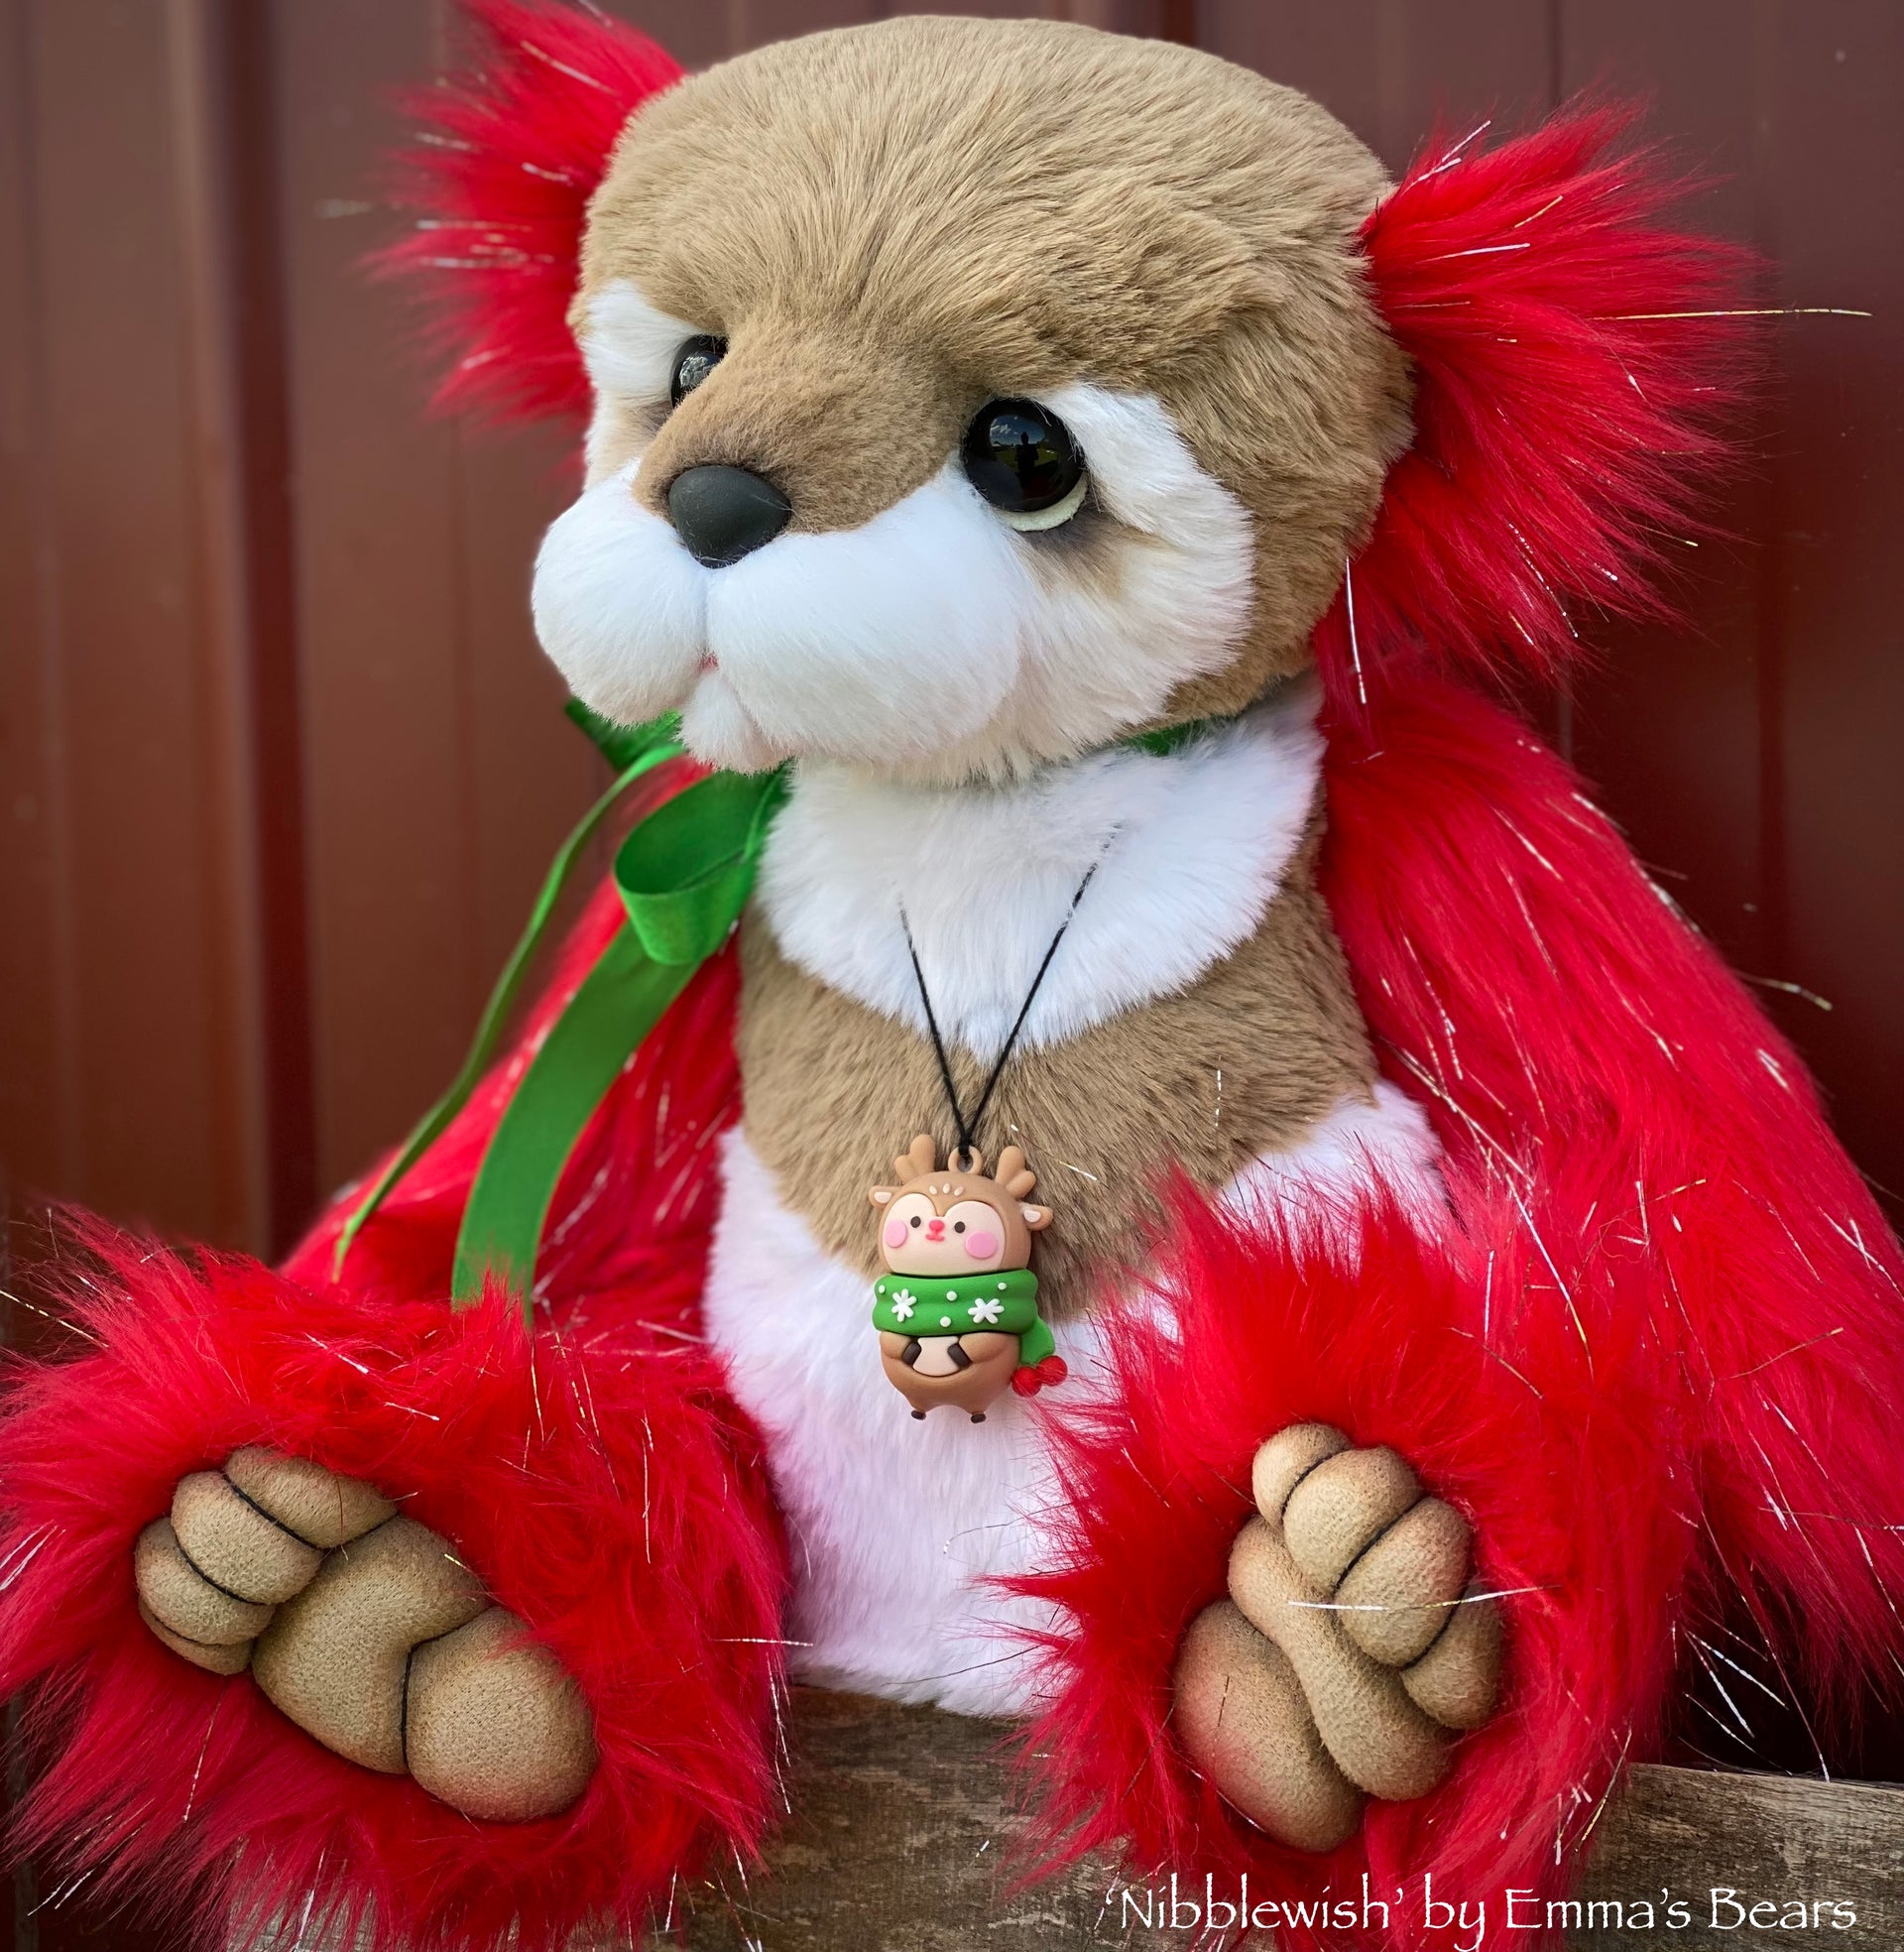 Nibblewish - 17" Faux Fur Christmas Artist Bear by Emma's Bears - OOAK